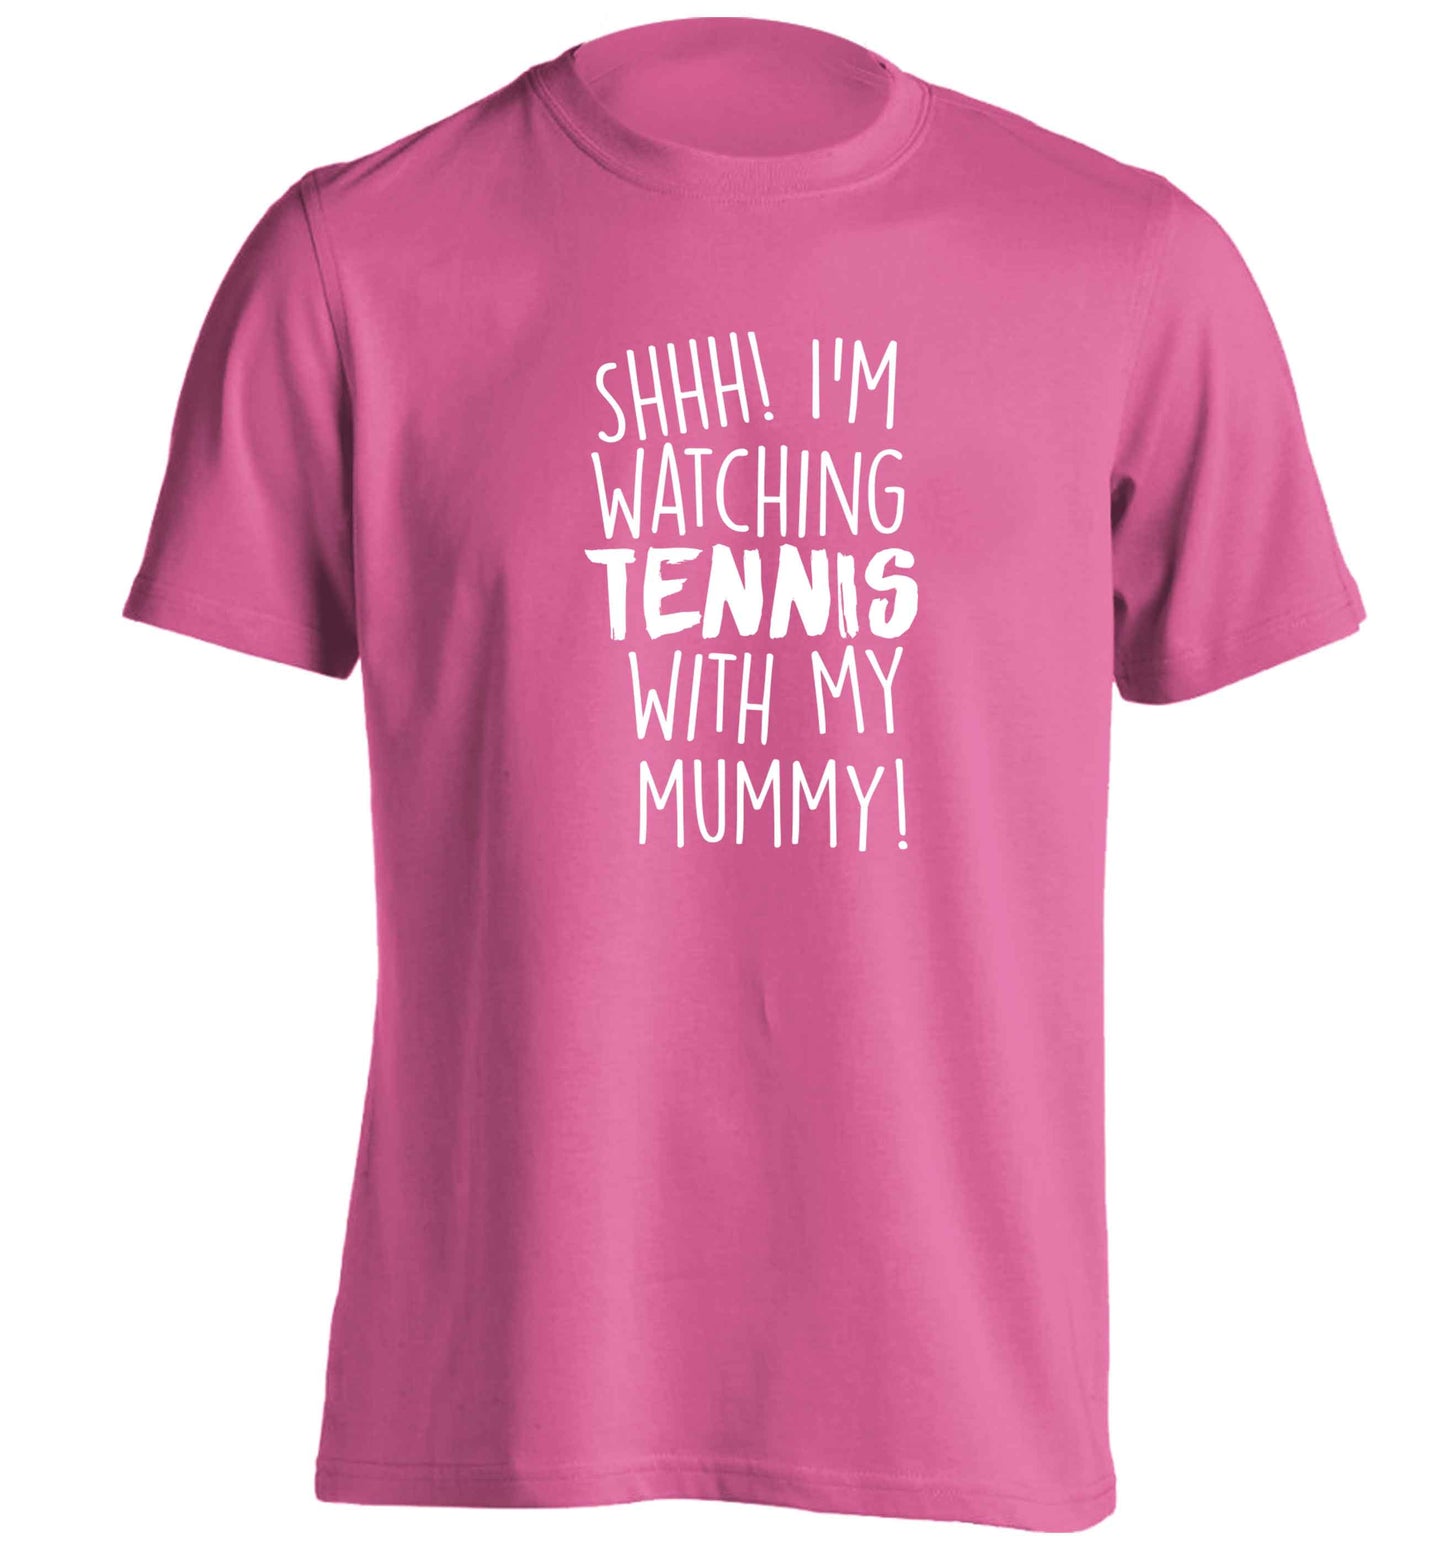 Shh! I'm watching tennis with my mummy! adults unisex pink Tshirt 2XL